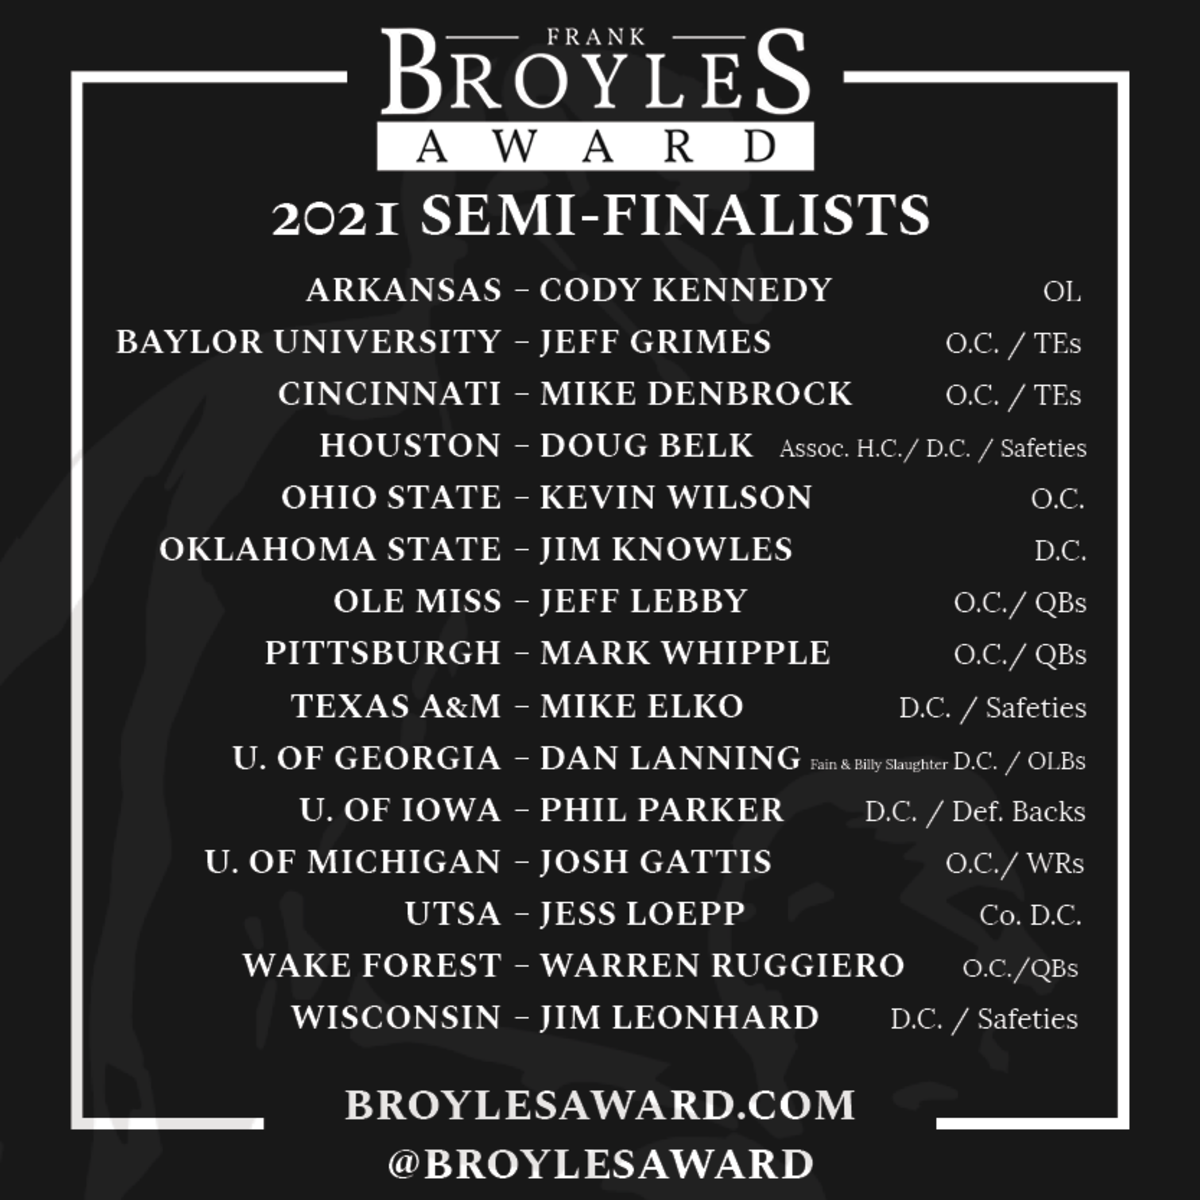 2021 Broyles Semifinalists